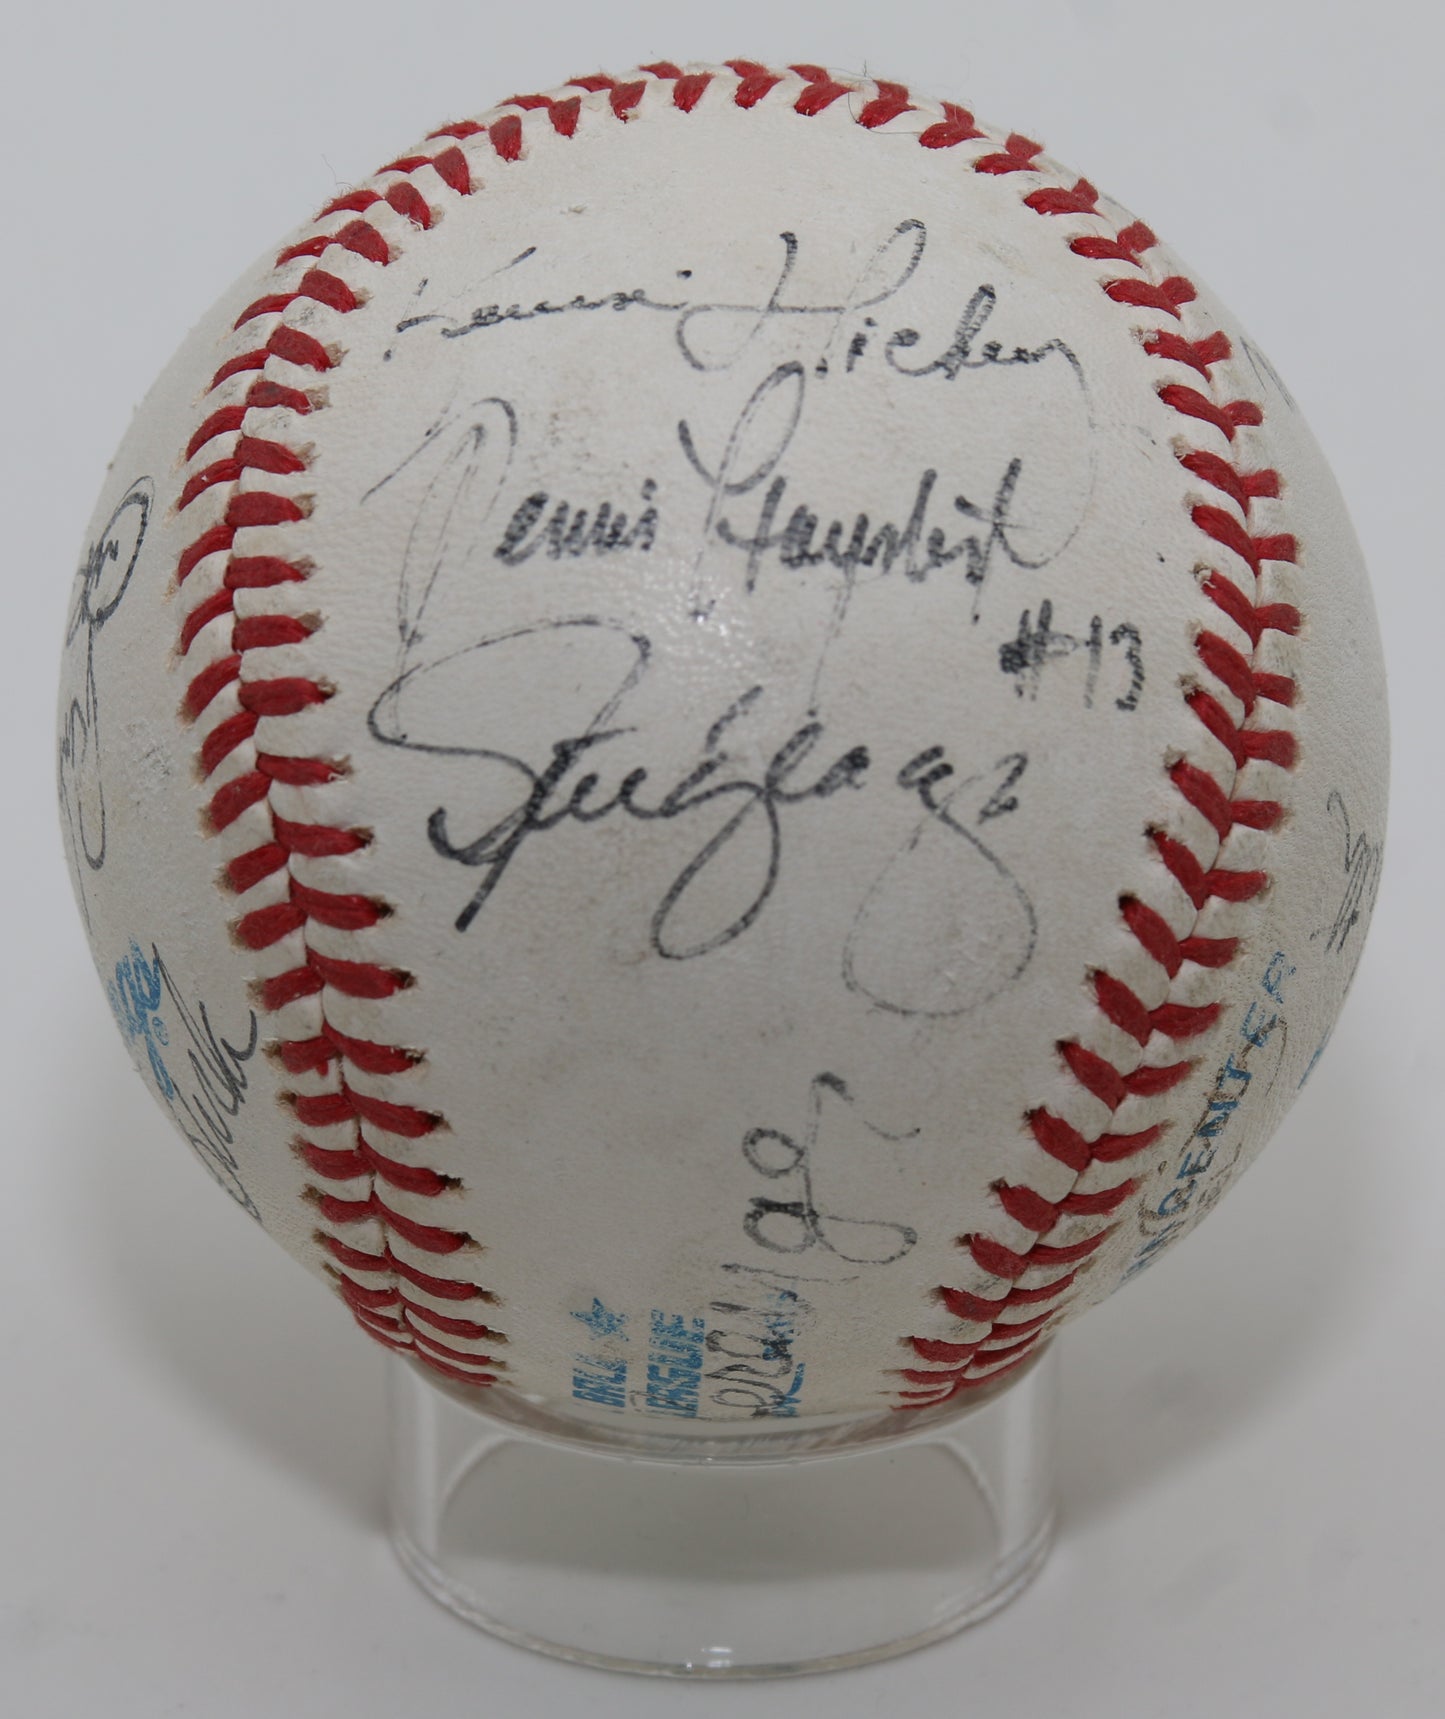 
                  
                    Major League II Cast Autographed Baseball - Signed by Charlie Sheen, Tom Berenger, Corbin Bernsen, Omar Epps, Dennis Haysbert, Alison Doody, +9
                  
                